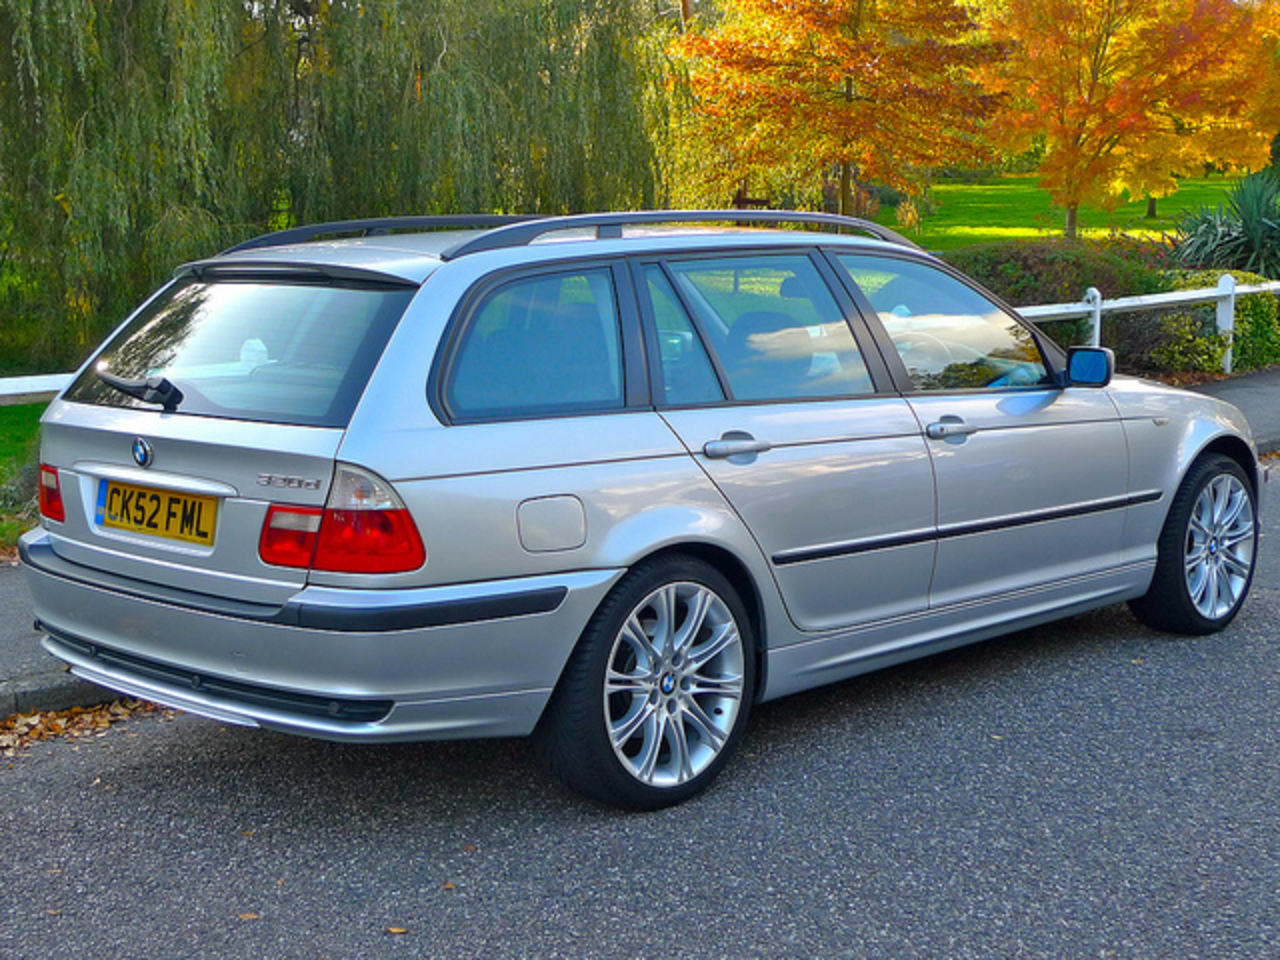 2002 BMW 320d SE Touring 17 | Flickr - Photo Sharing!